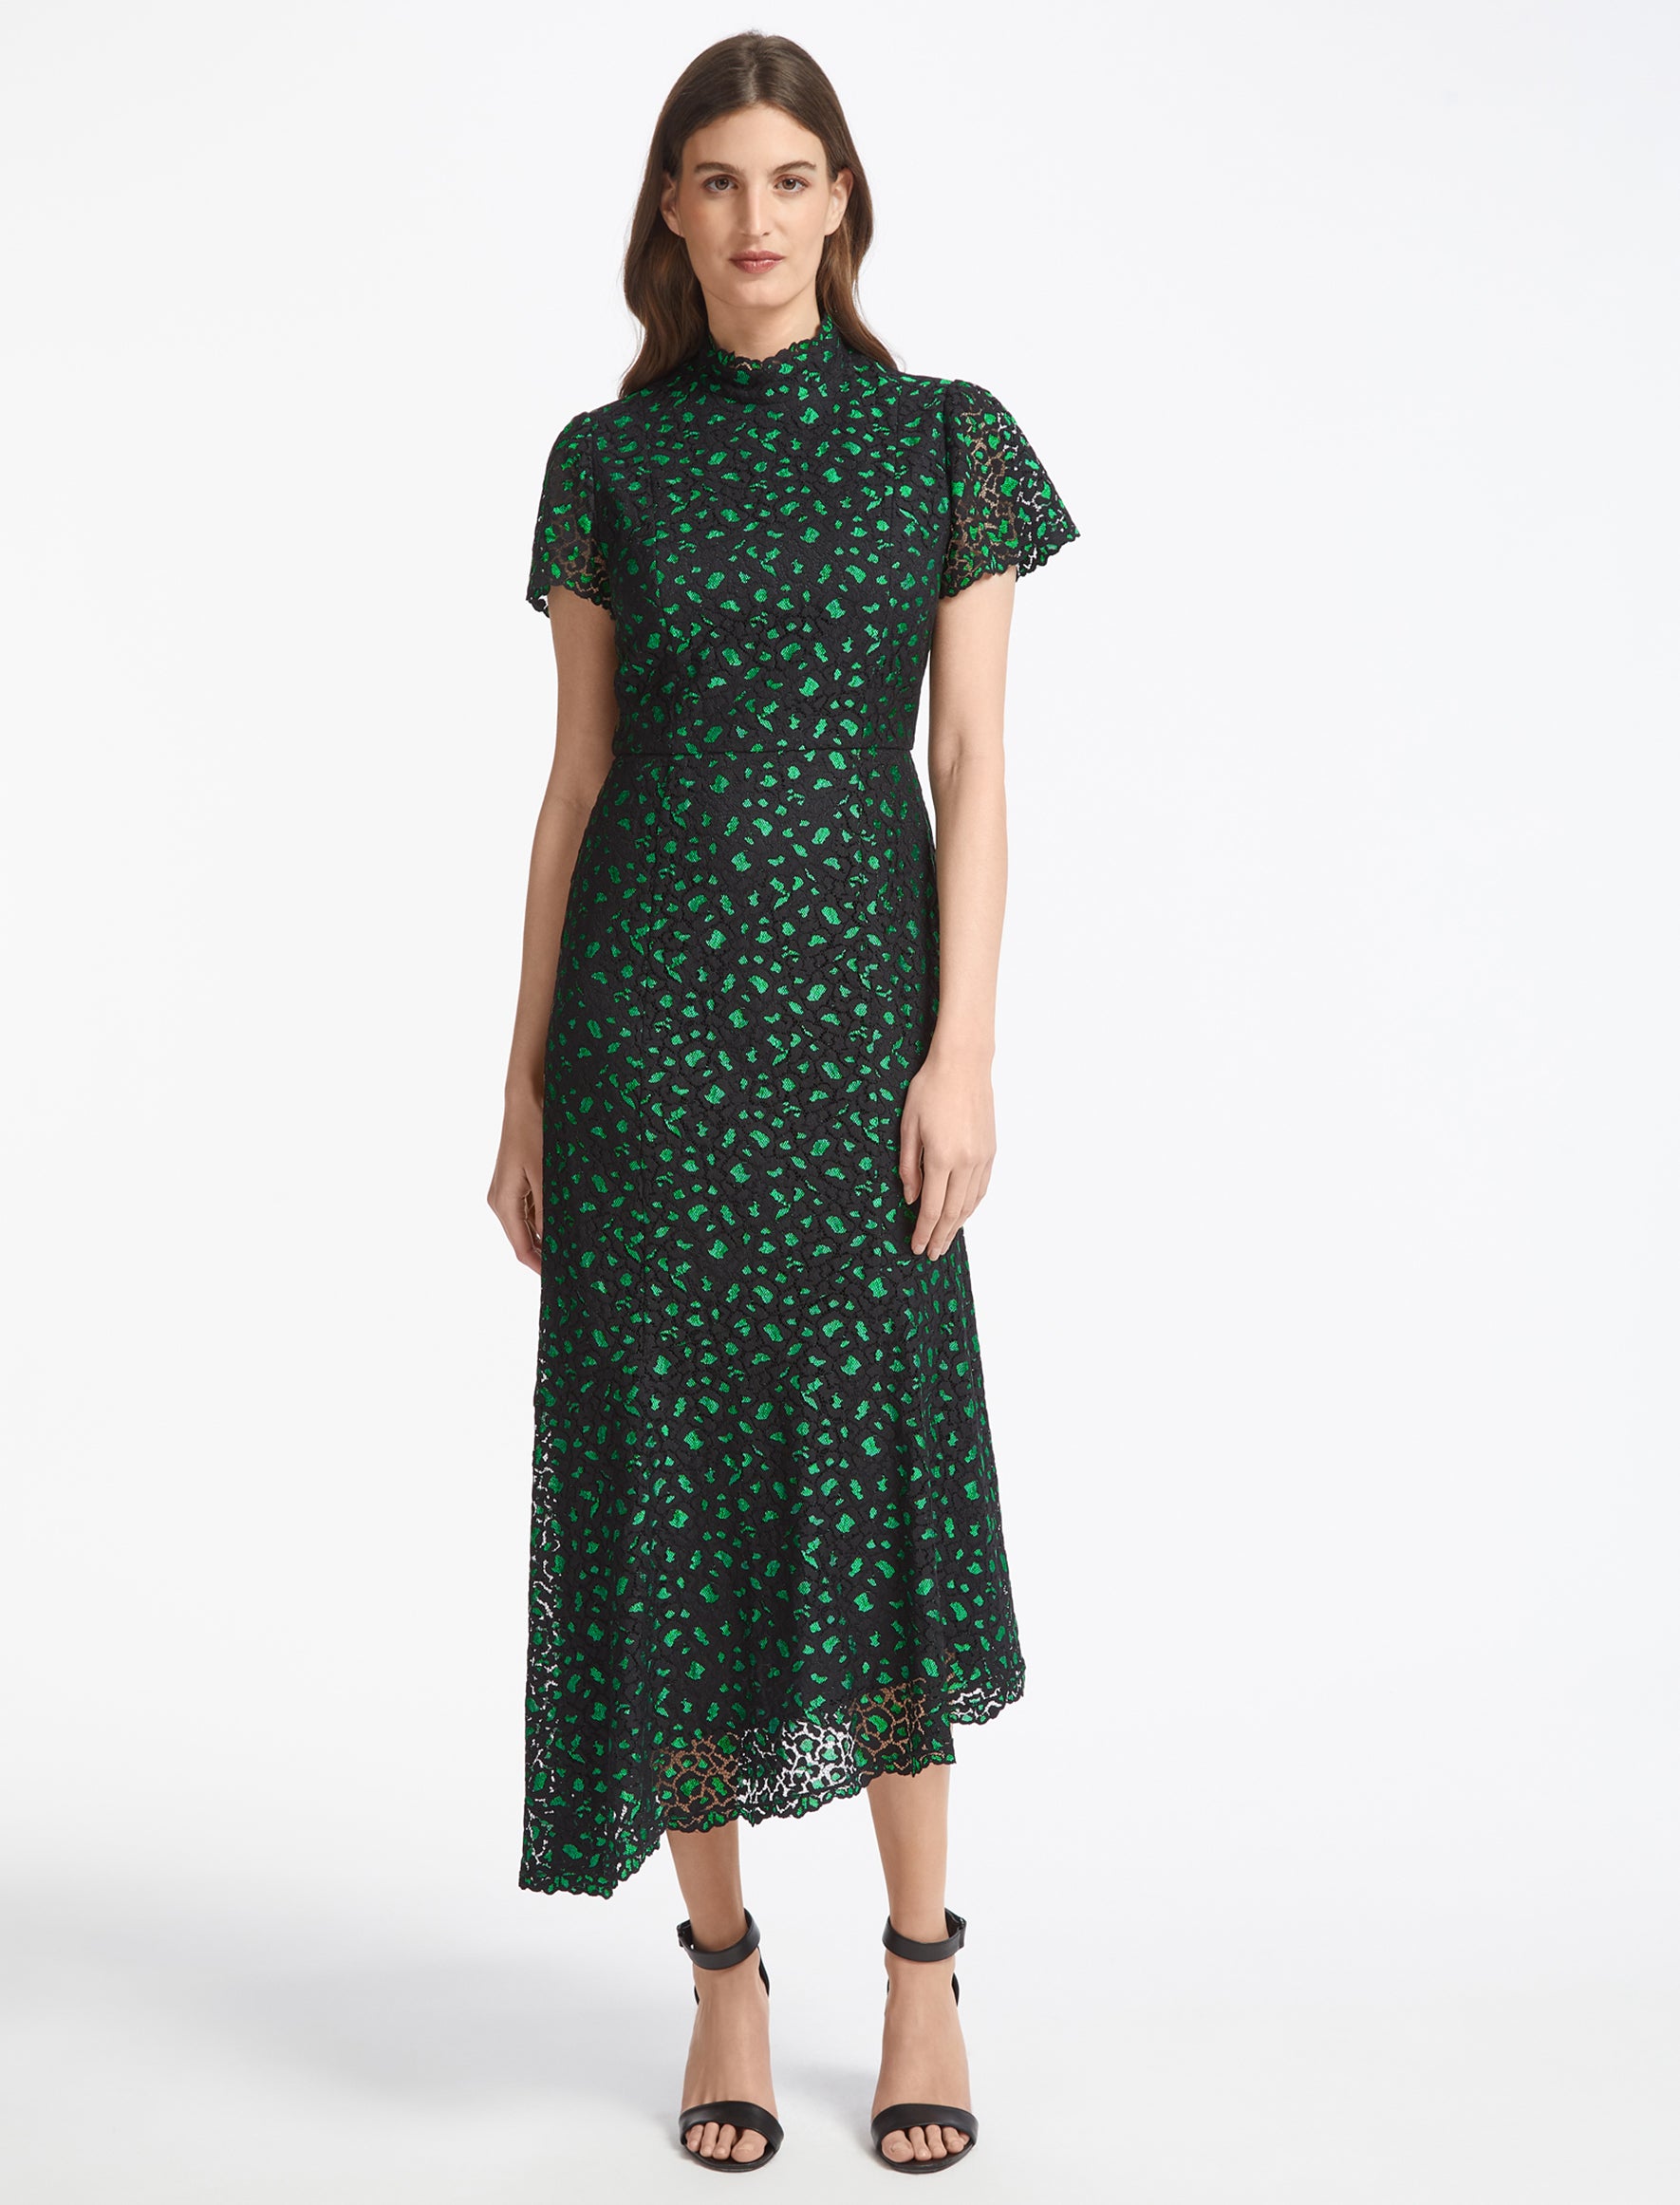 Cefinn Kayla Lace Asymmetric Dress - Emerald Green Black